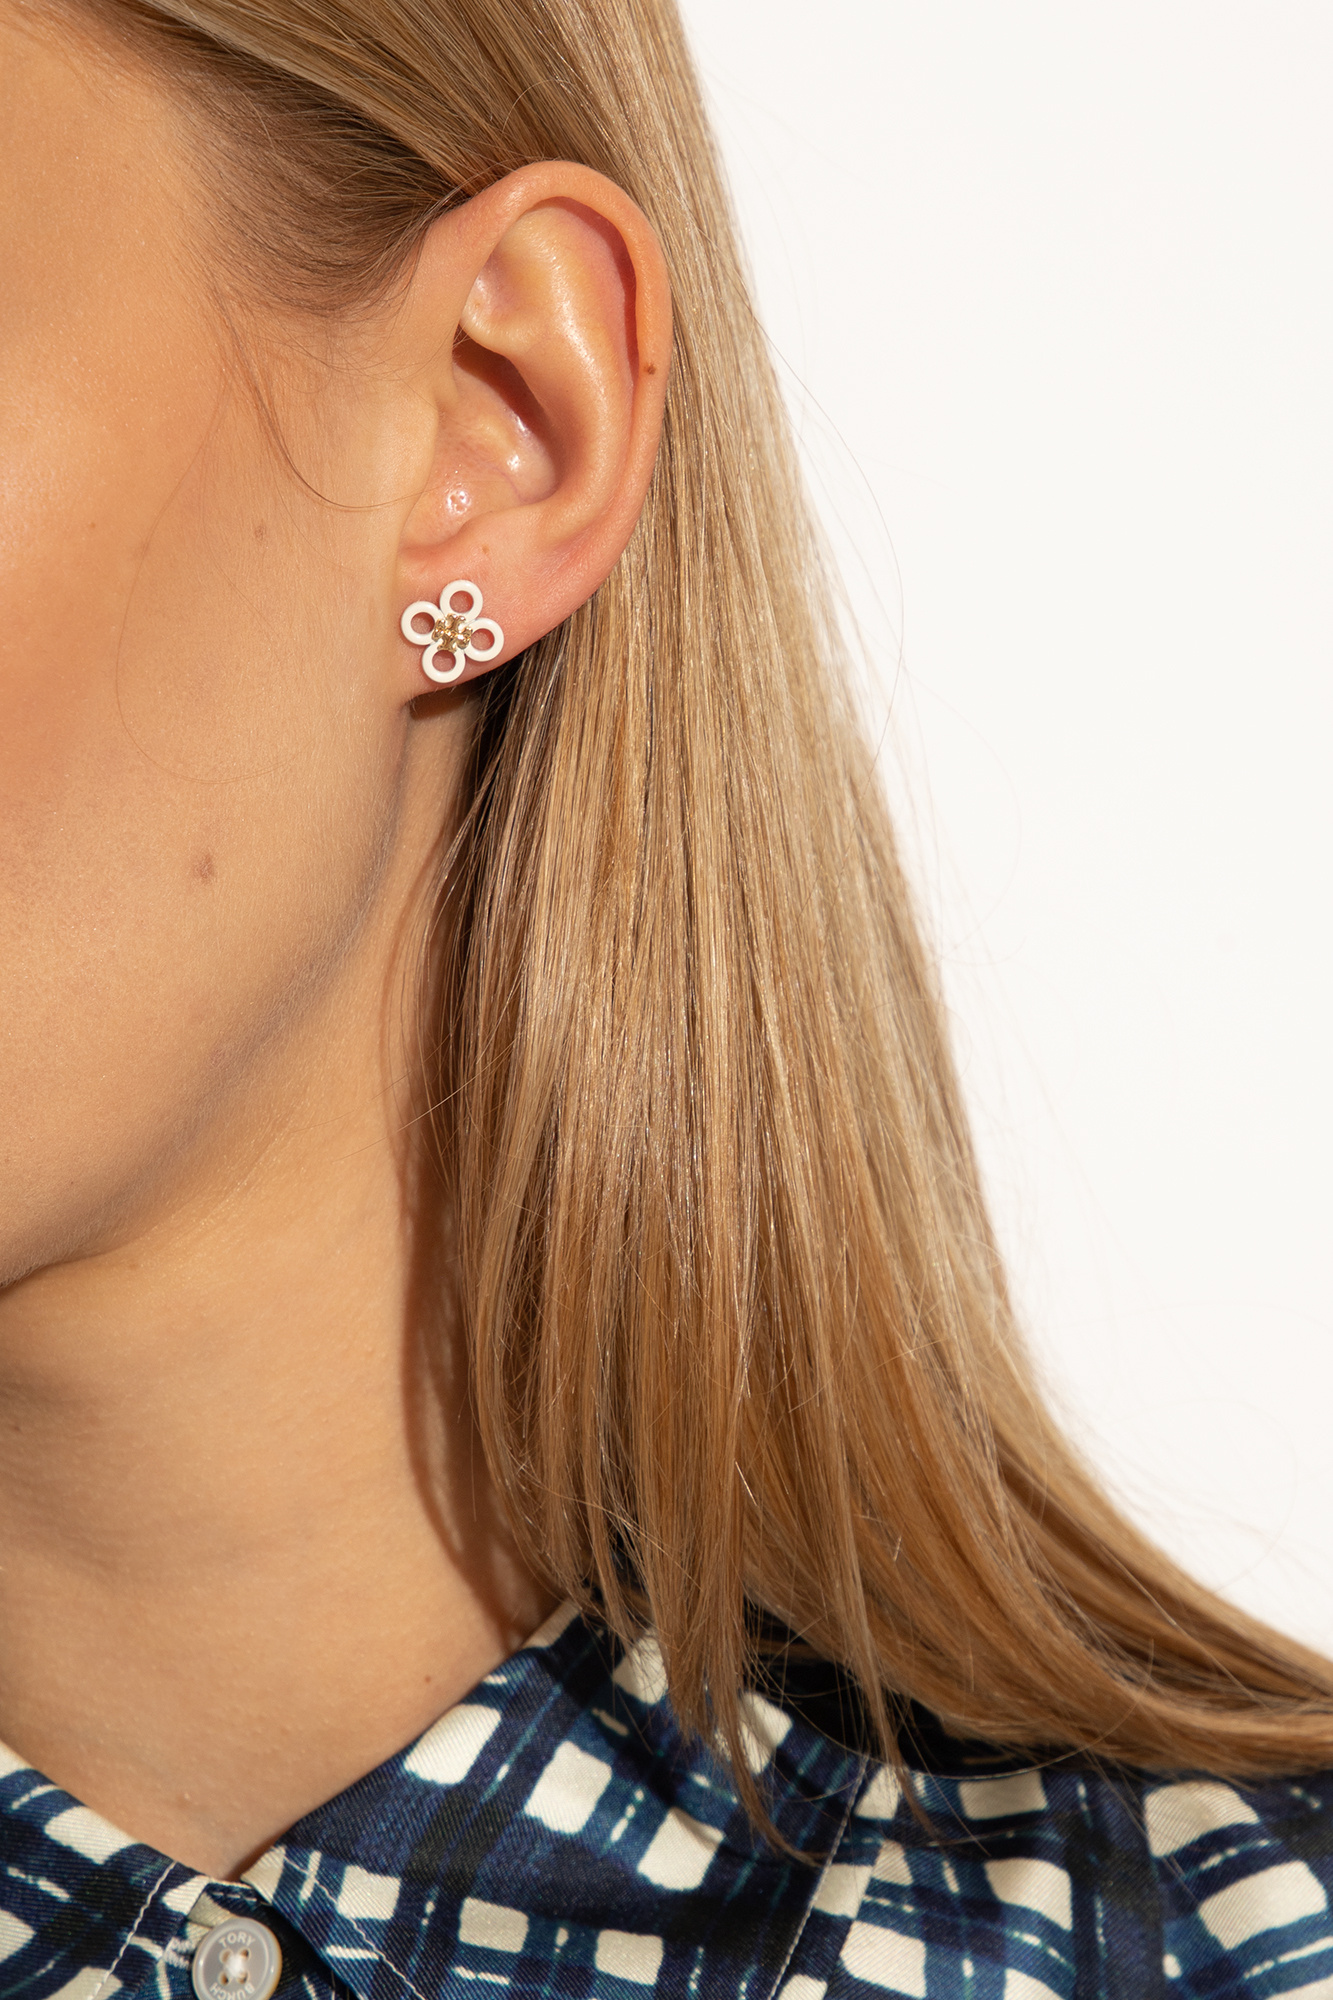 Tory Burch Small Kira clover-stud Earrings - Gold